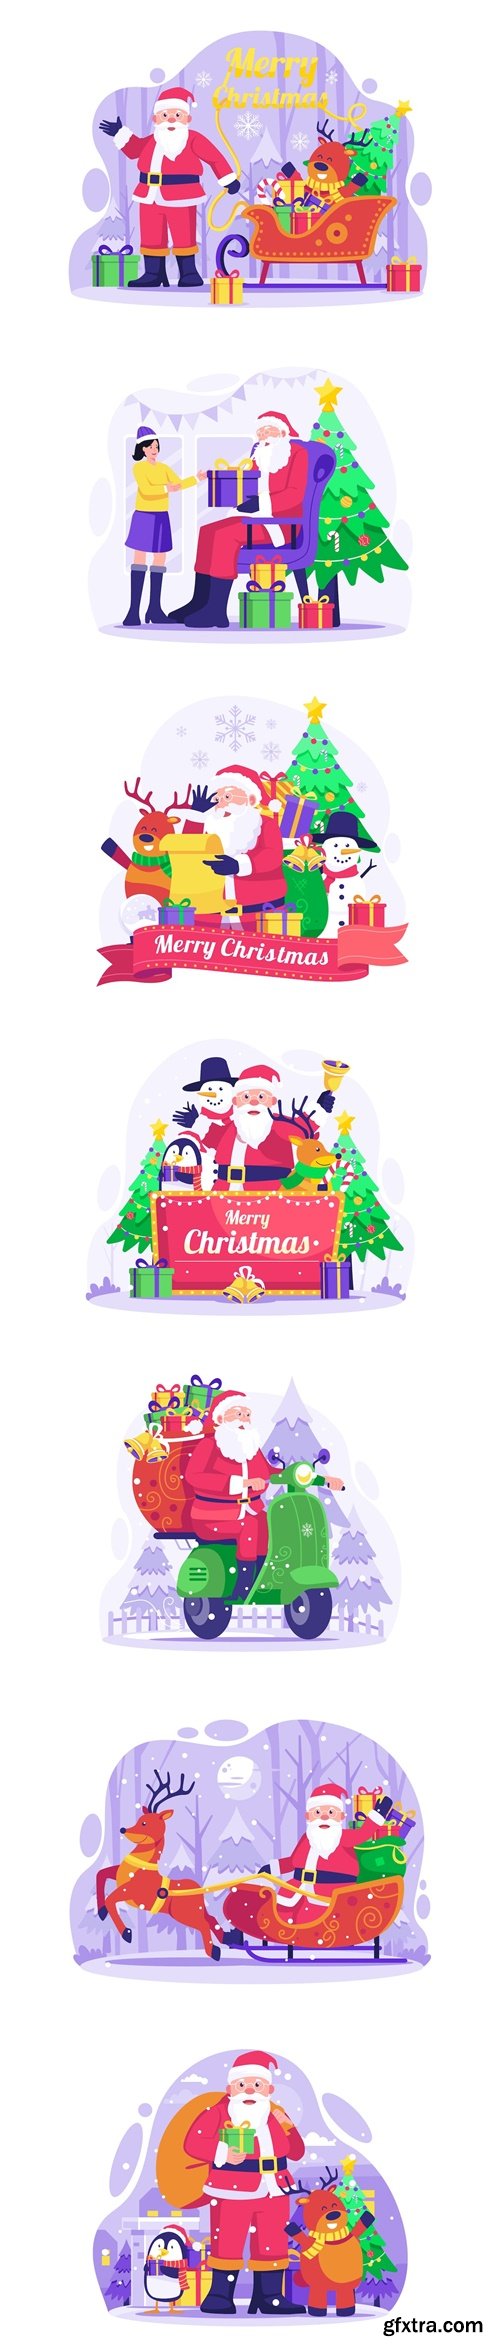 Merry Christmas & Santa Claus concept design illustration